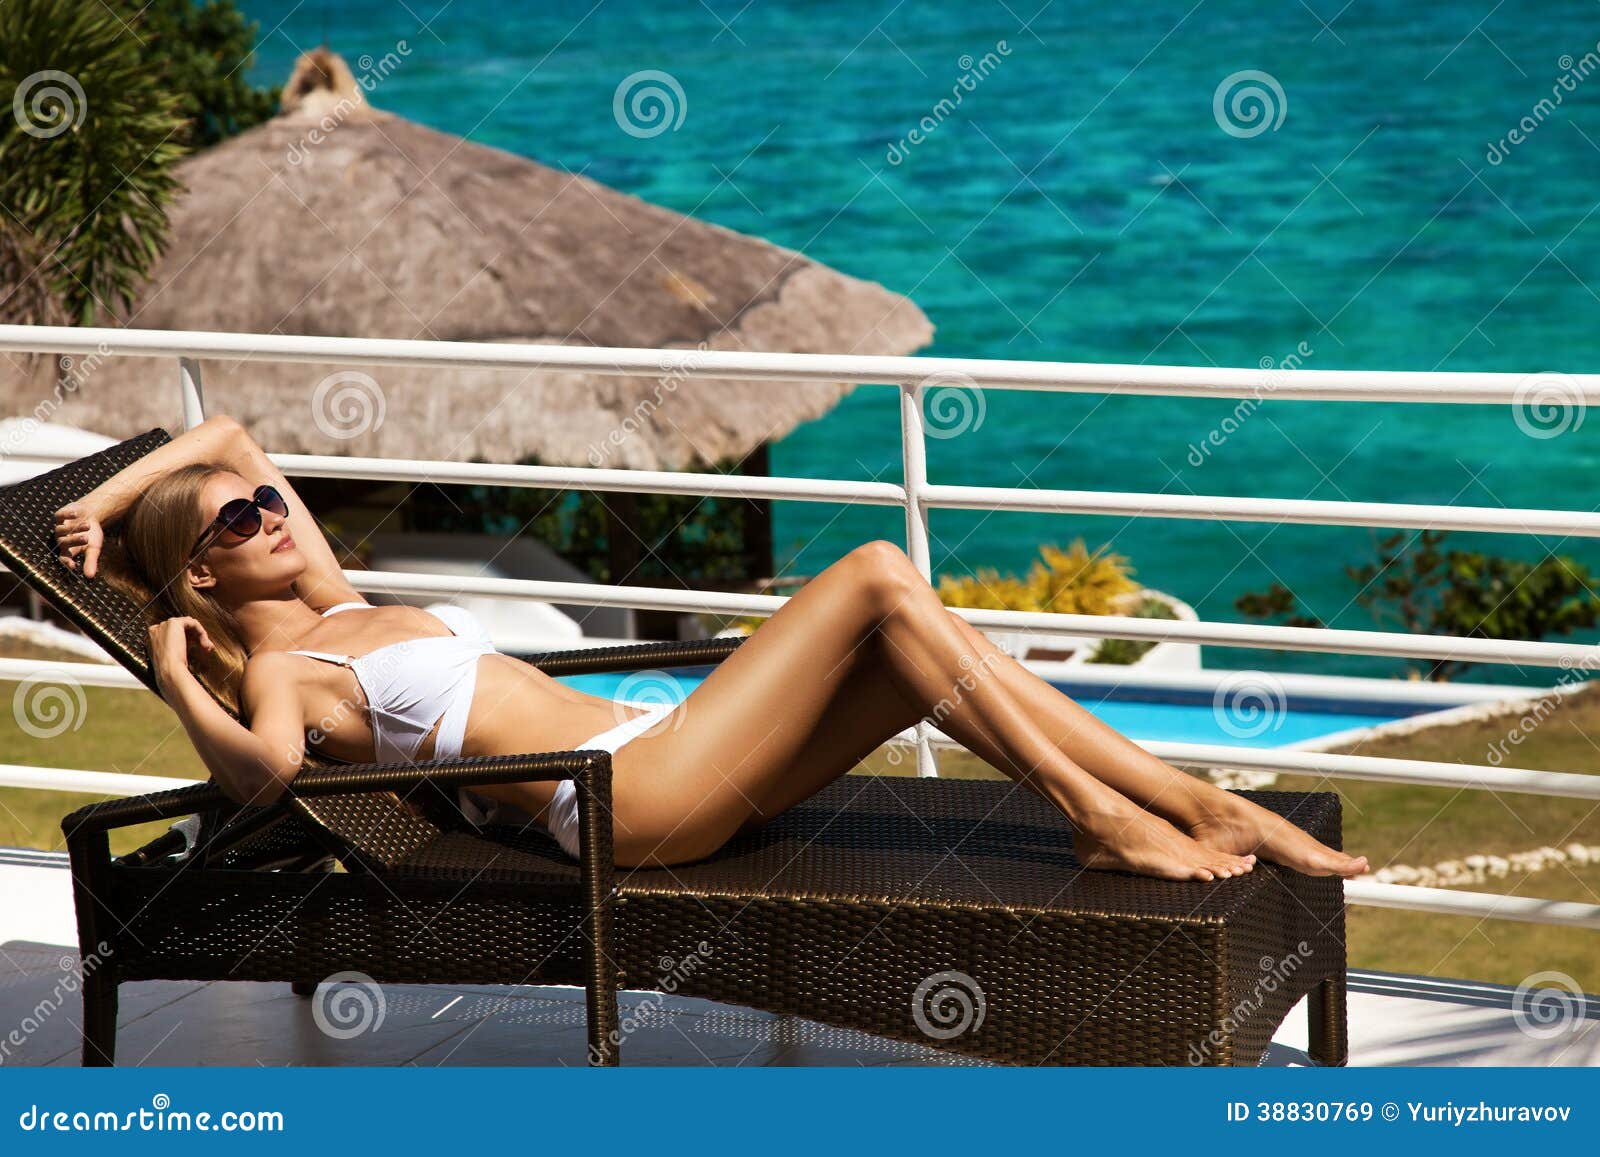 young woman sunbathing on sunbed